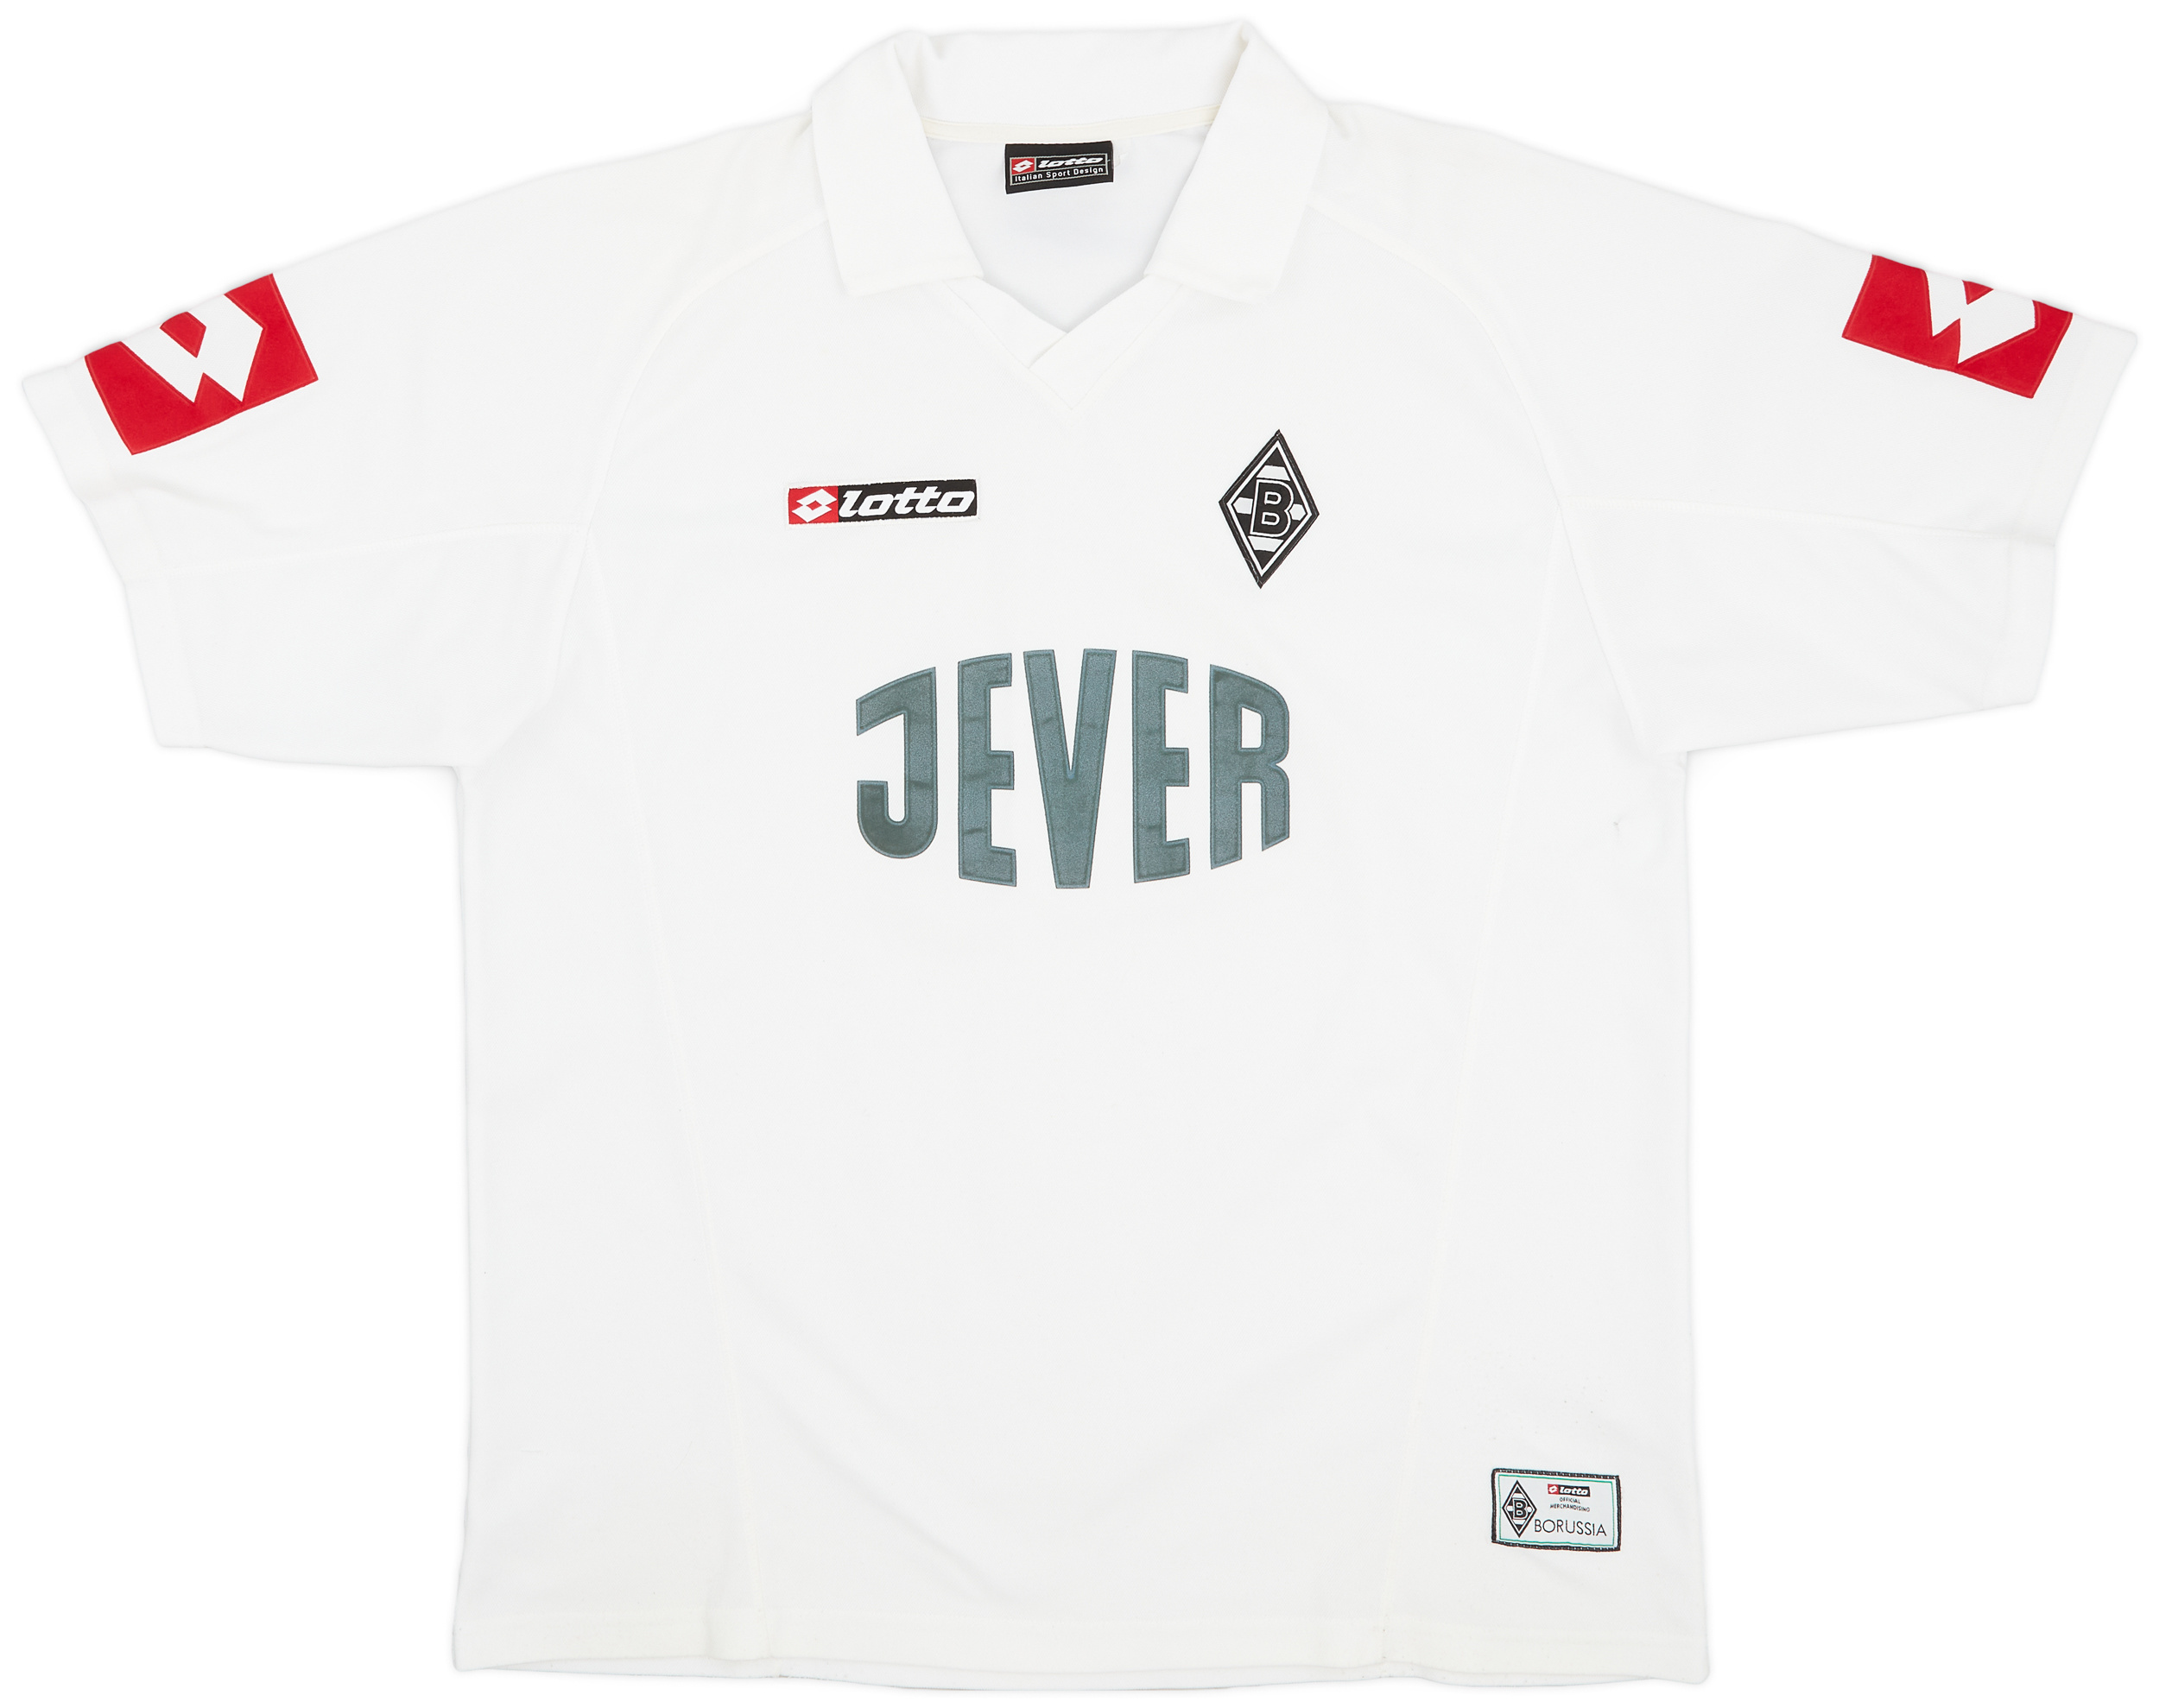 2003-05 Borussia Monchengladbach Signed Home Shirt - 6/10 - ()